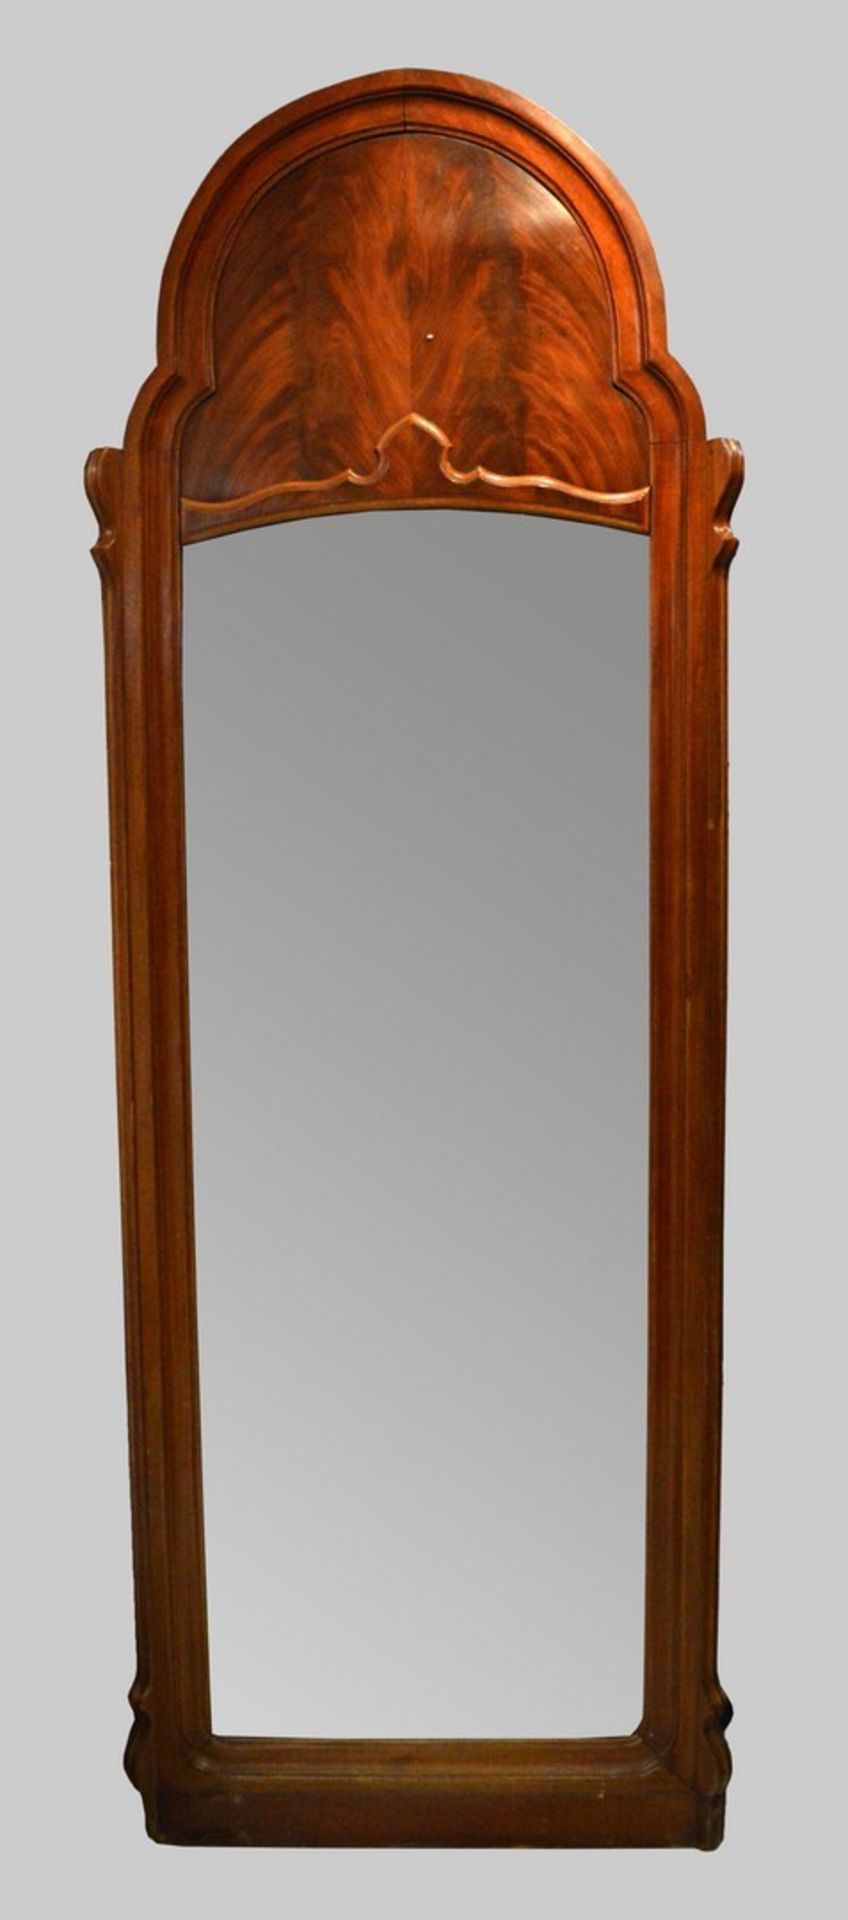 Spiegel Mahagoni, rechteckiges Hochformat, profilierter Rand, geschwungener Kopf, H 220 cm, B 74 cm,